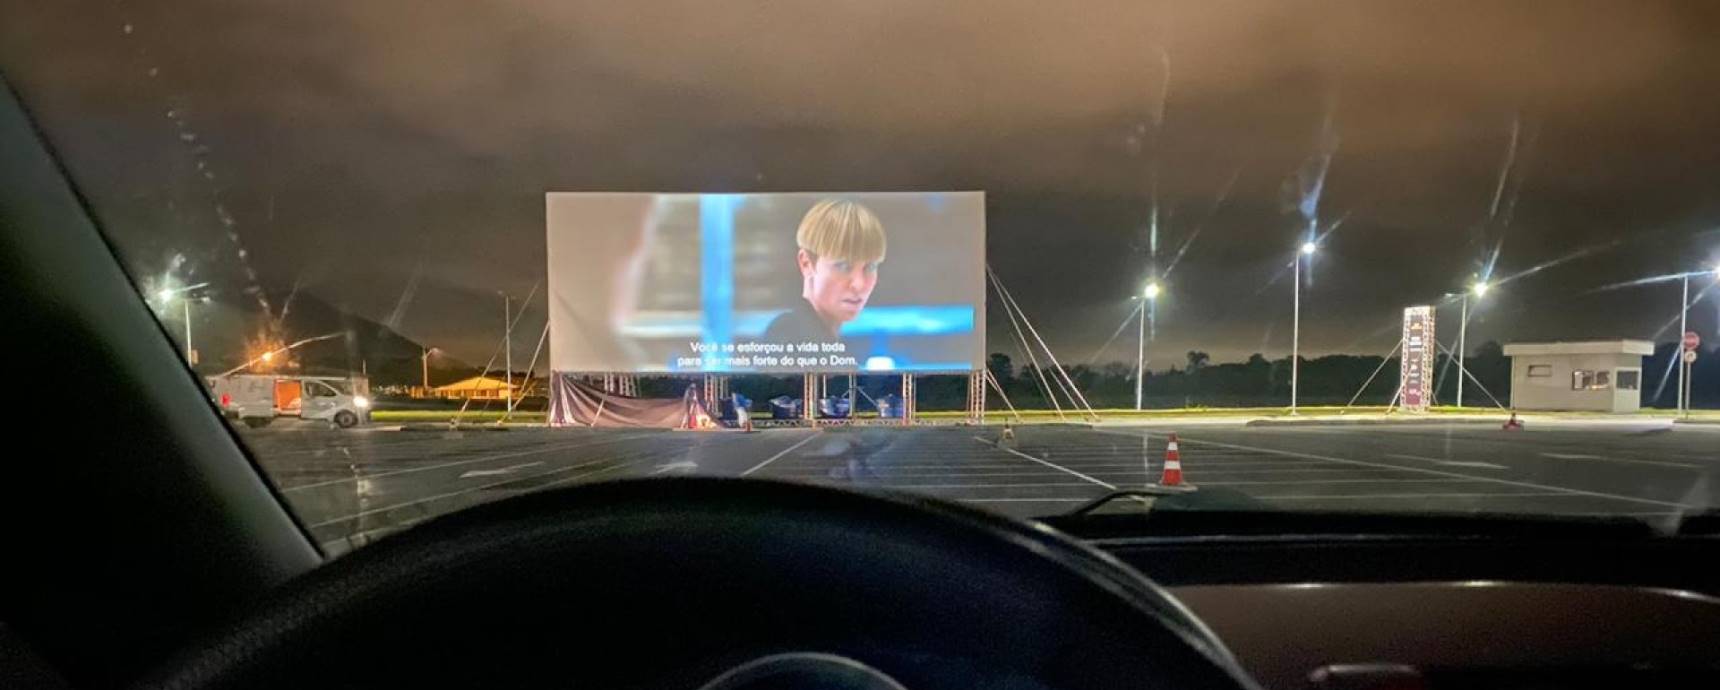 Cine Drive-in der Cinesystem-Gruppe kommt am internationalen Flughafen Florianópolis an